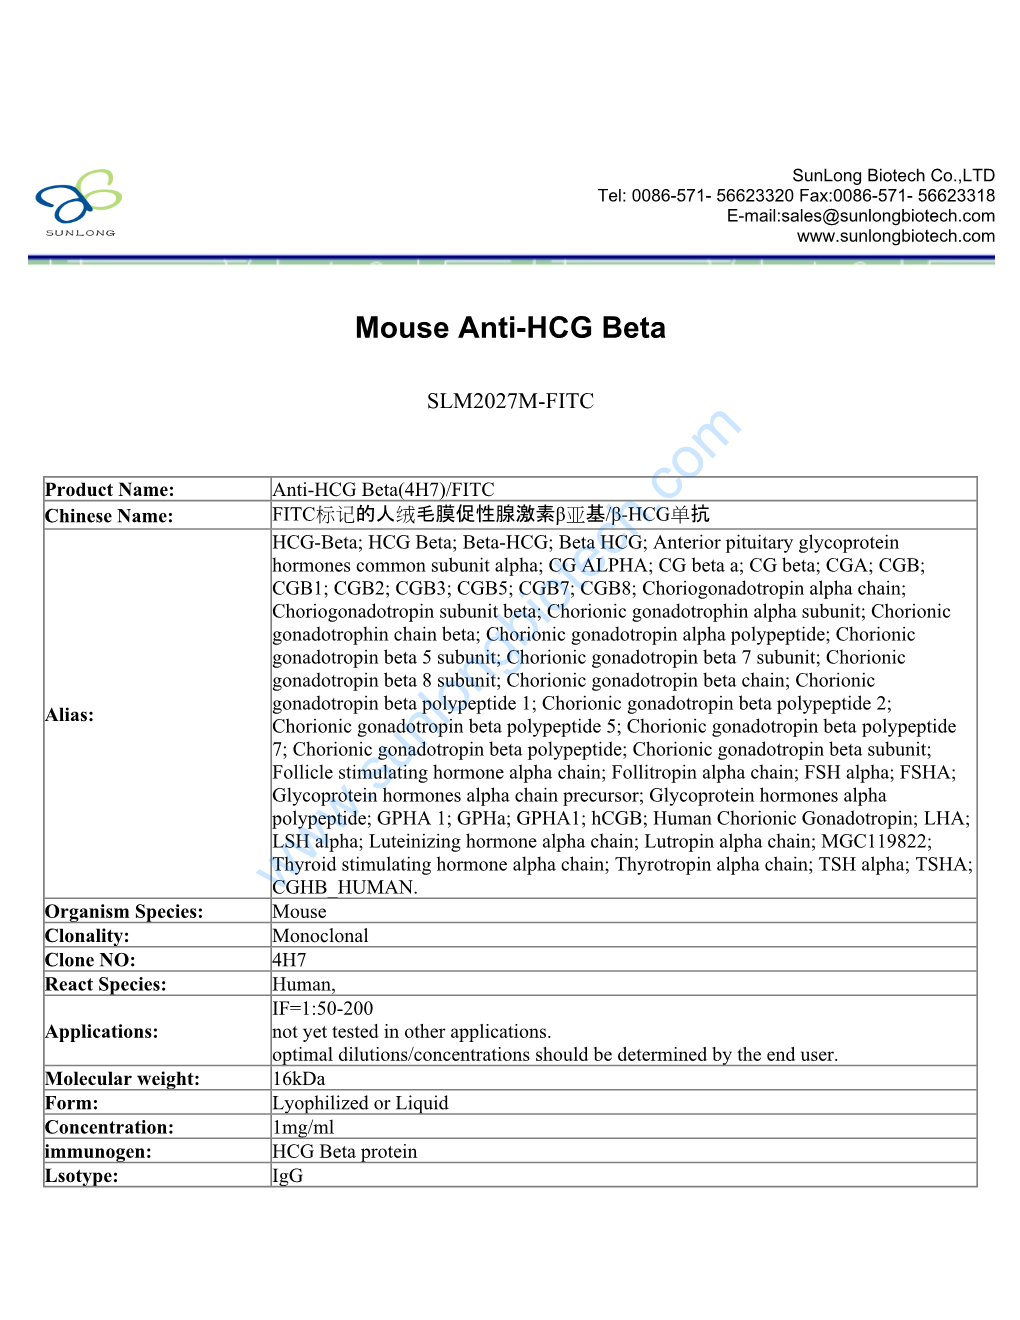 Mouse Anti-HCG Beta-SLM2027M-FITC